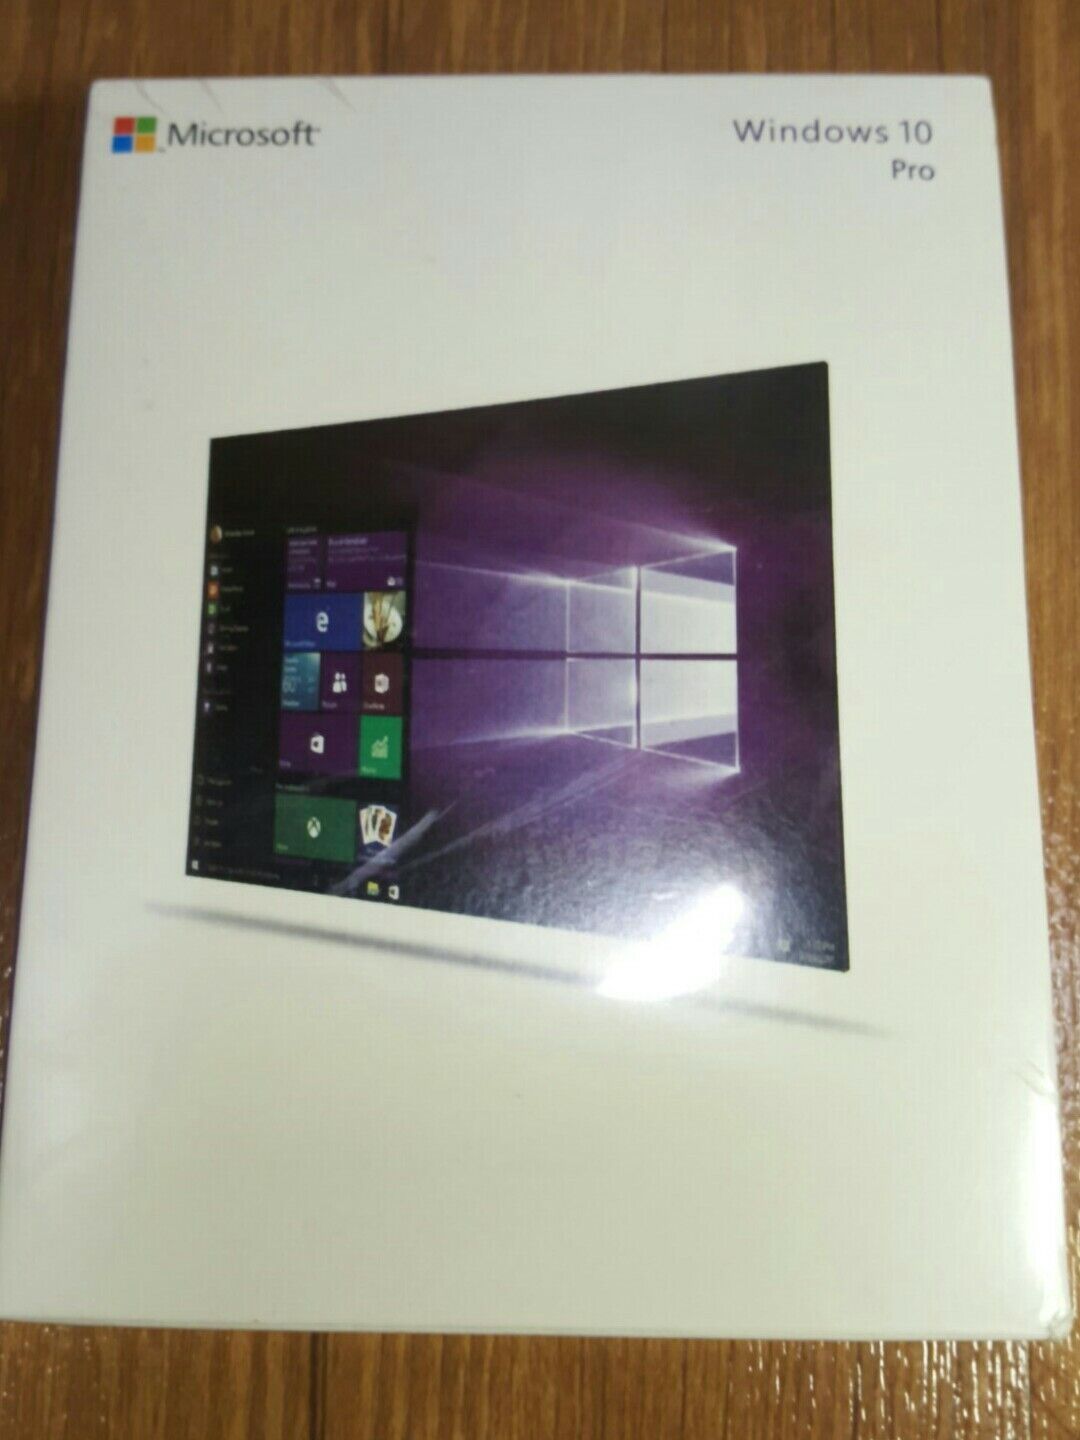 Microsoft Windows 10 Pro Operating System USB 3.0 Flash Drive